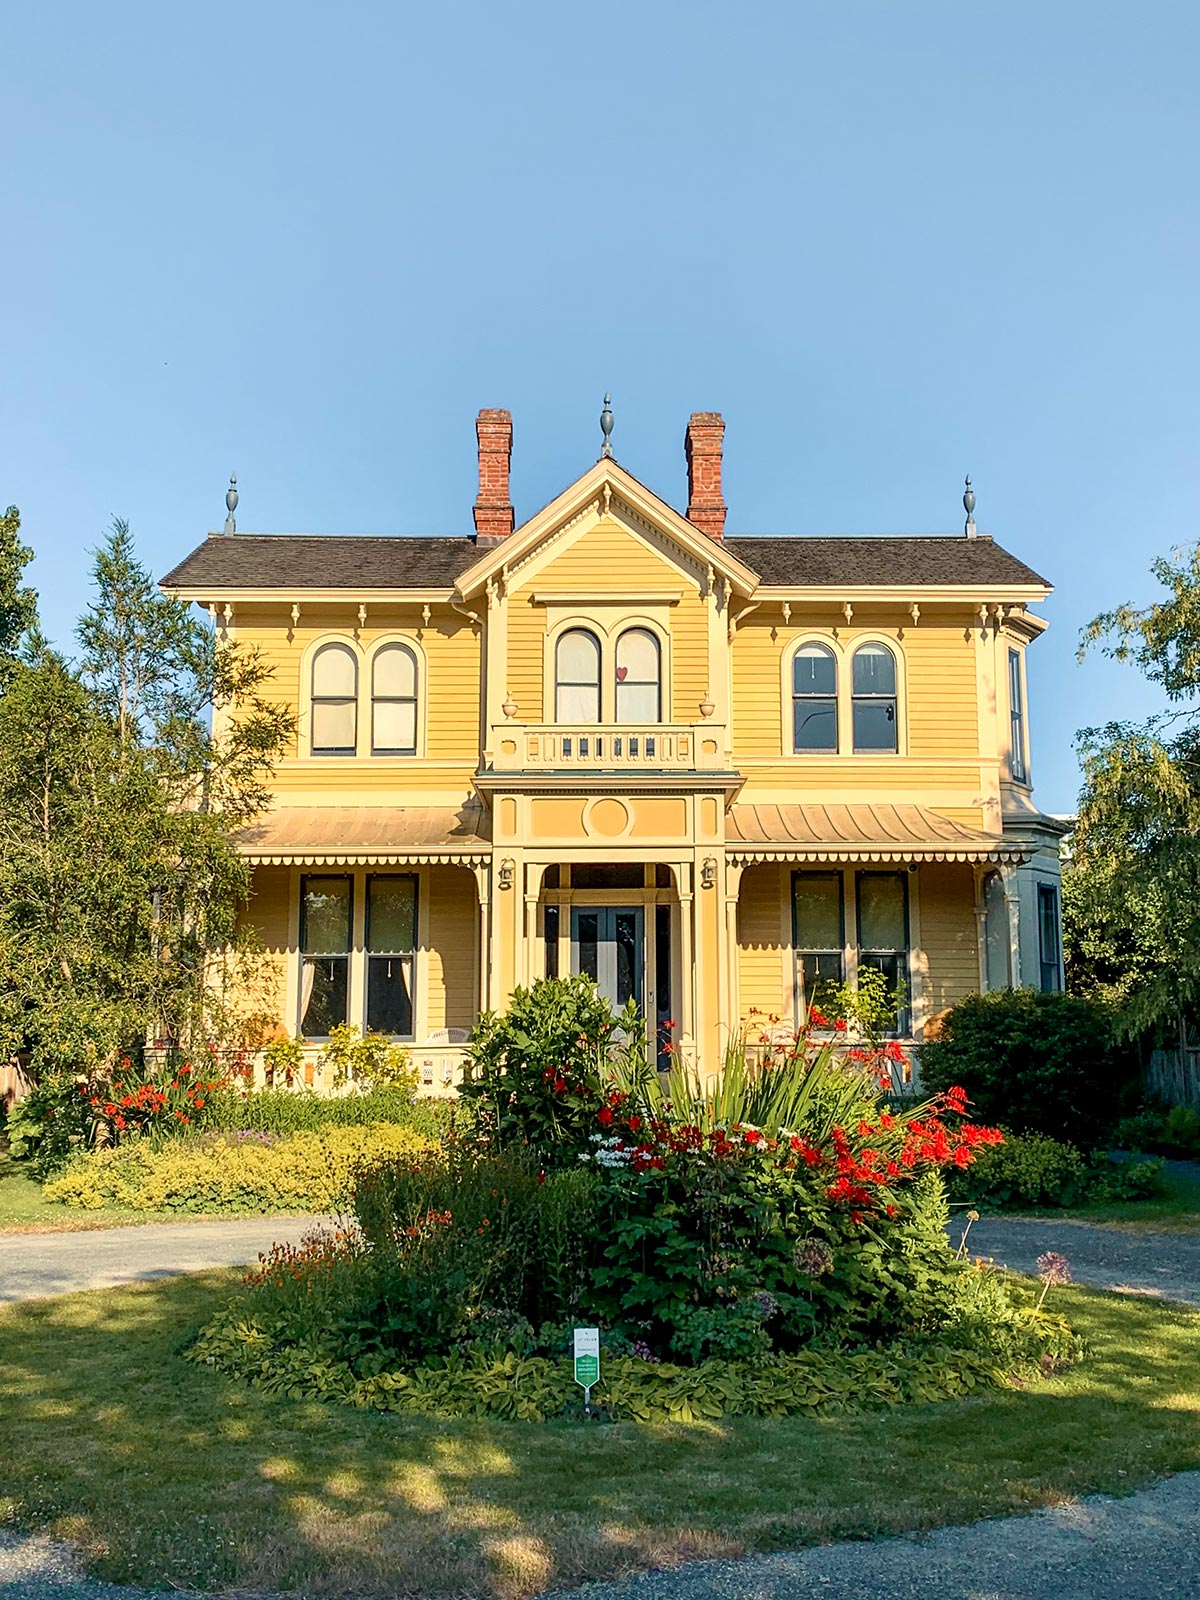 Maison de Emily Carr, Victoria, Colombie-Britannique, Canada / Emily Carr house, Victoria, BC, Canada